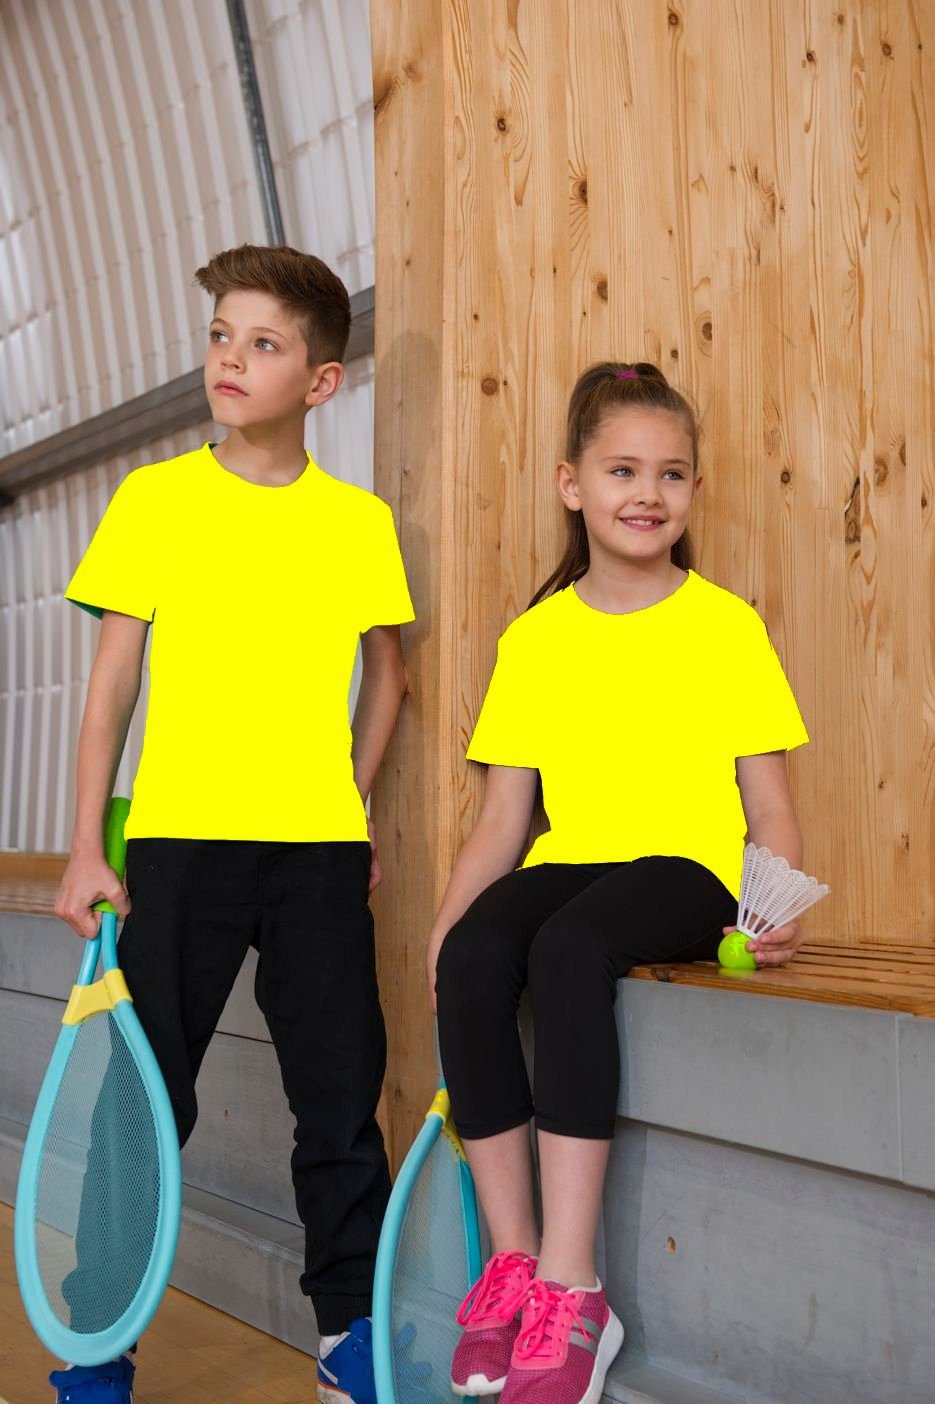 - Sport Neongrün, NEON Neongelb, Kinder AWDIS T-Shirts Neonpink, T-Shirt Neonorange